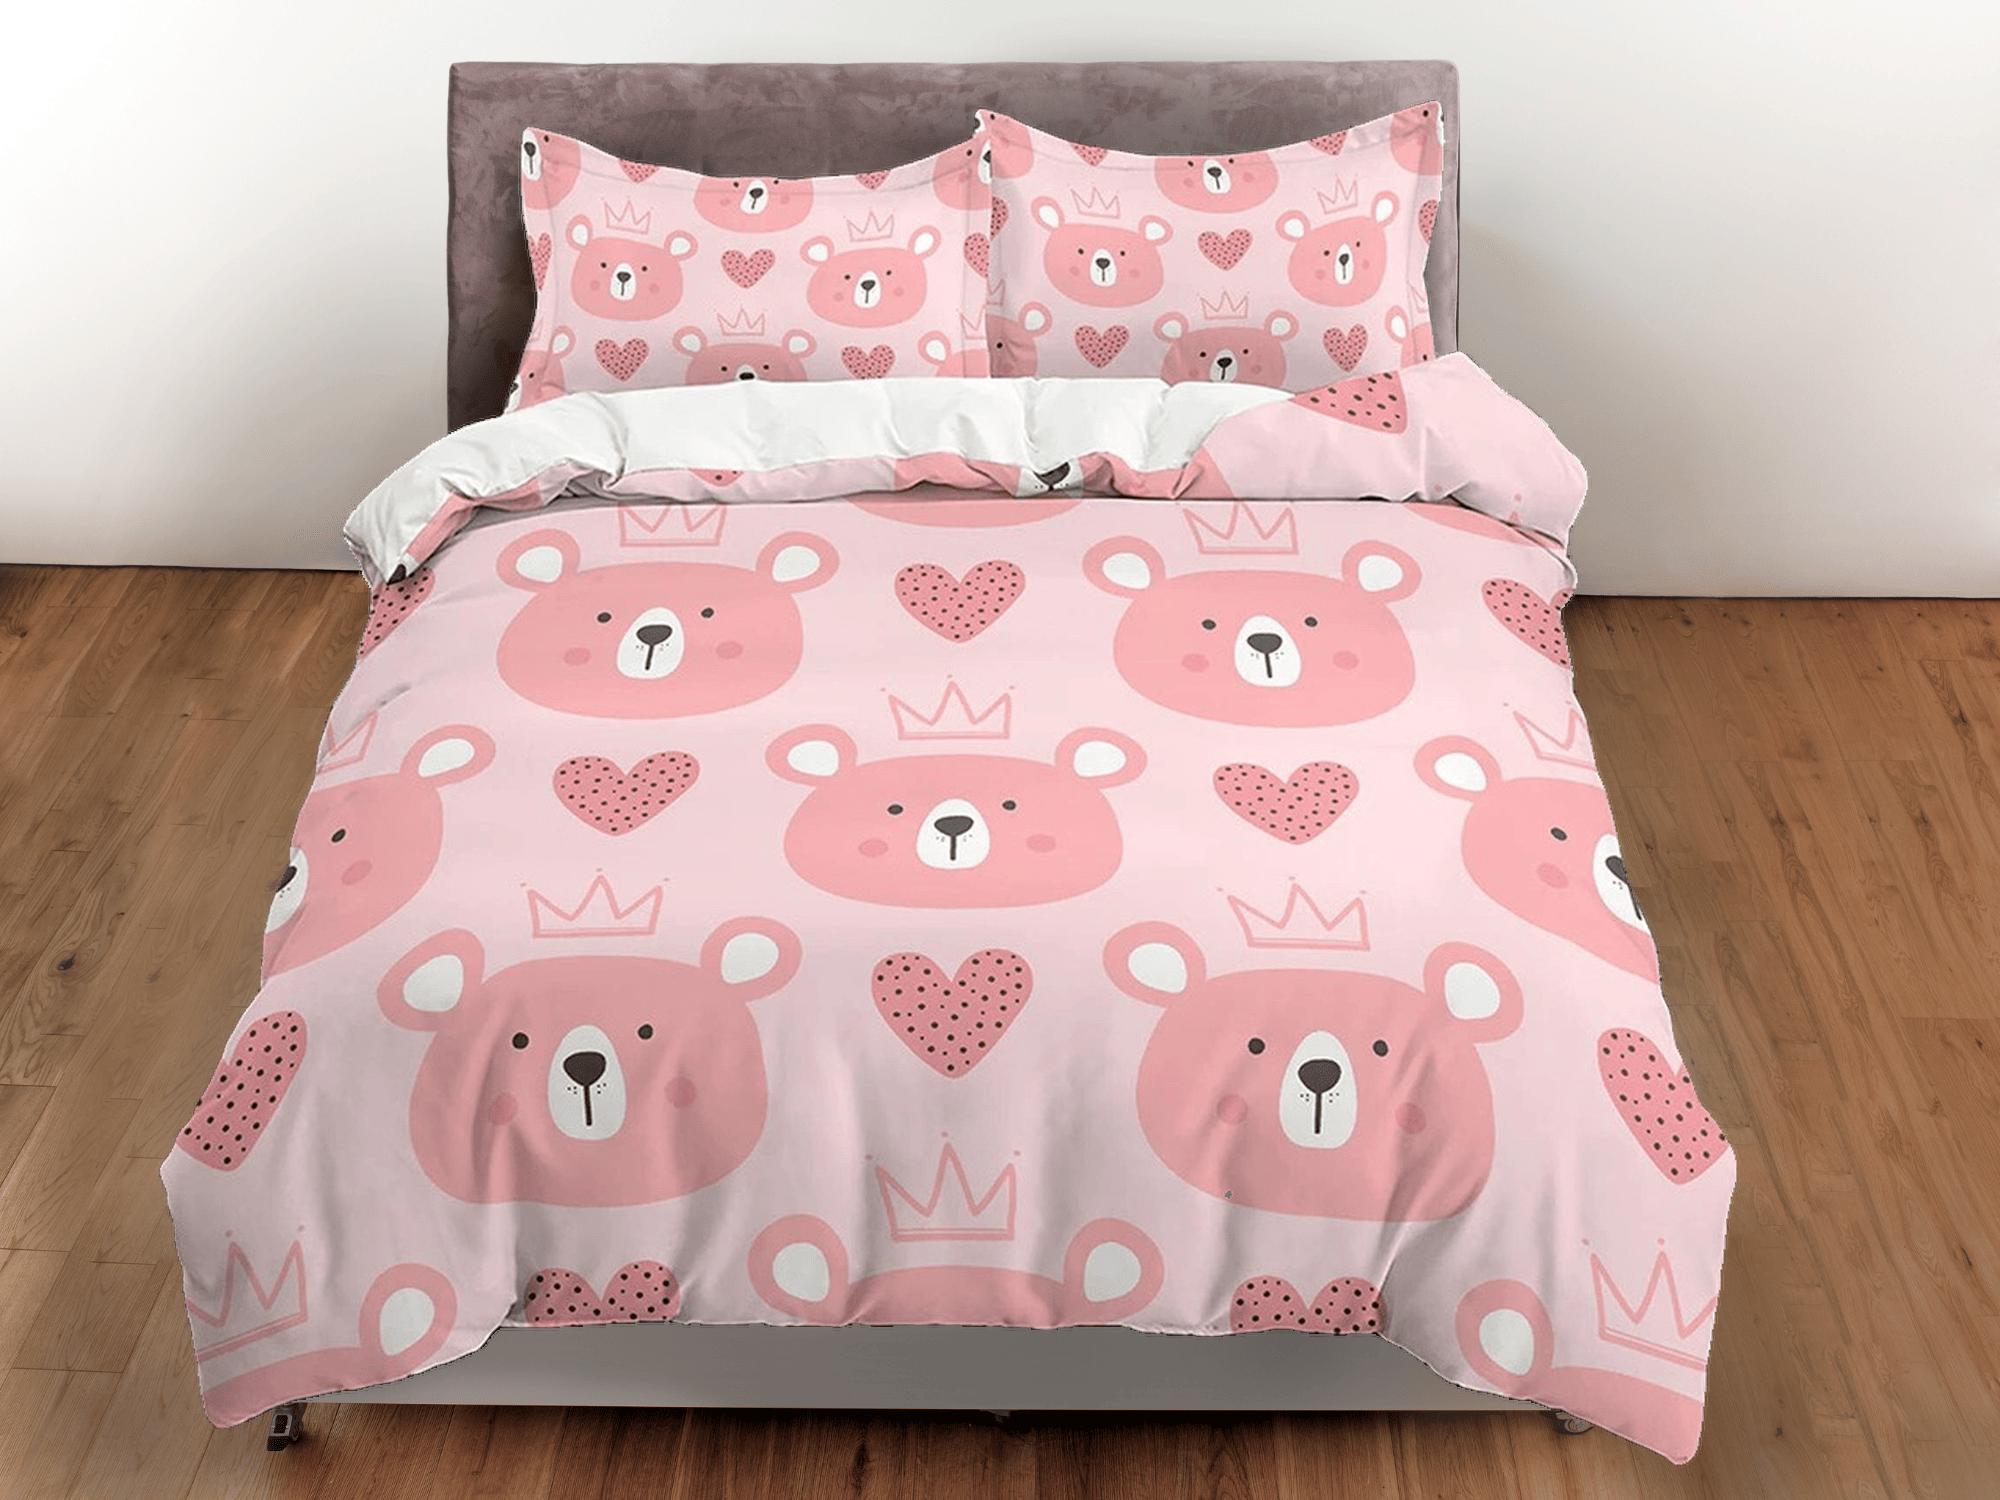 daintyduvet Cute princess bear pink girl toddler bedding, duvet cover for nursery kids, crib bedding, baby zipper bedding, king queen full twin